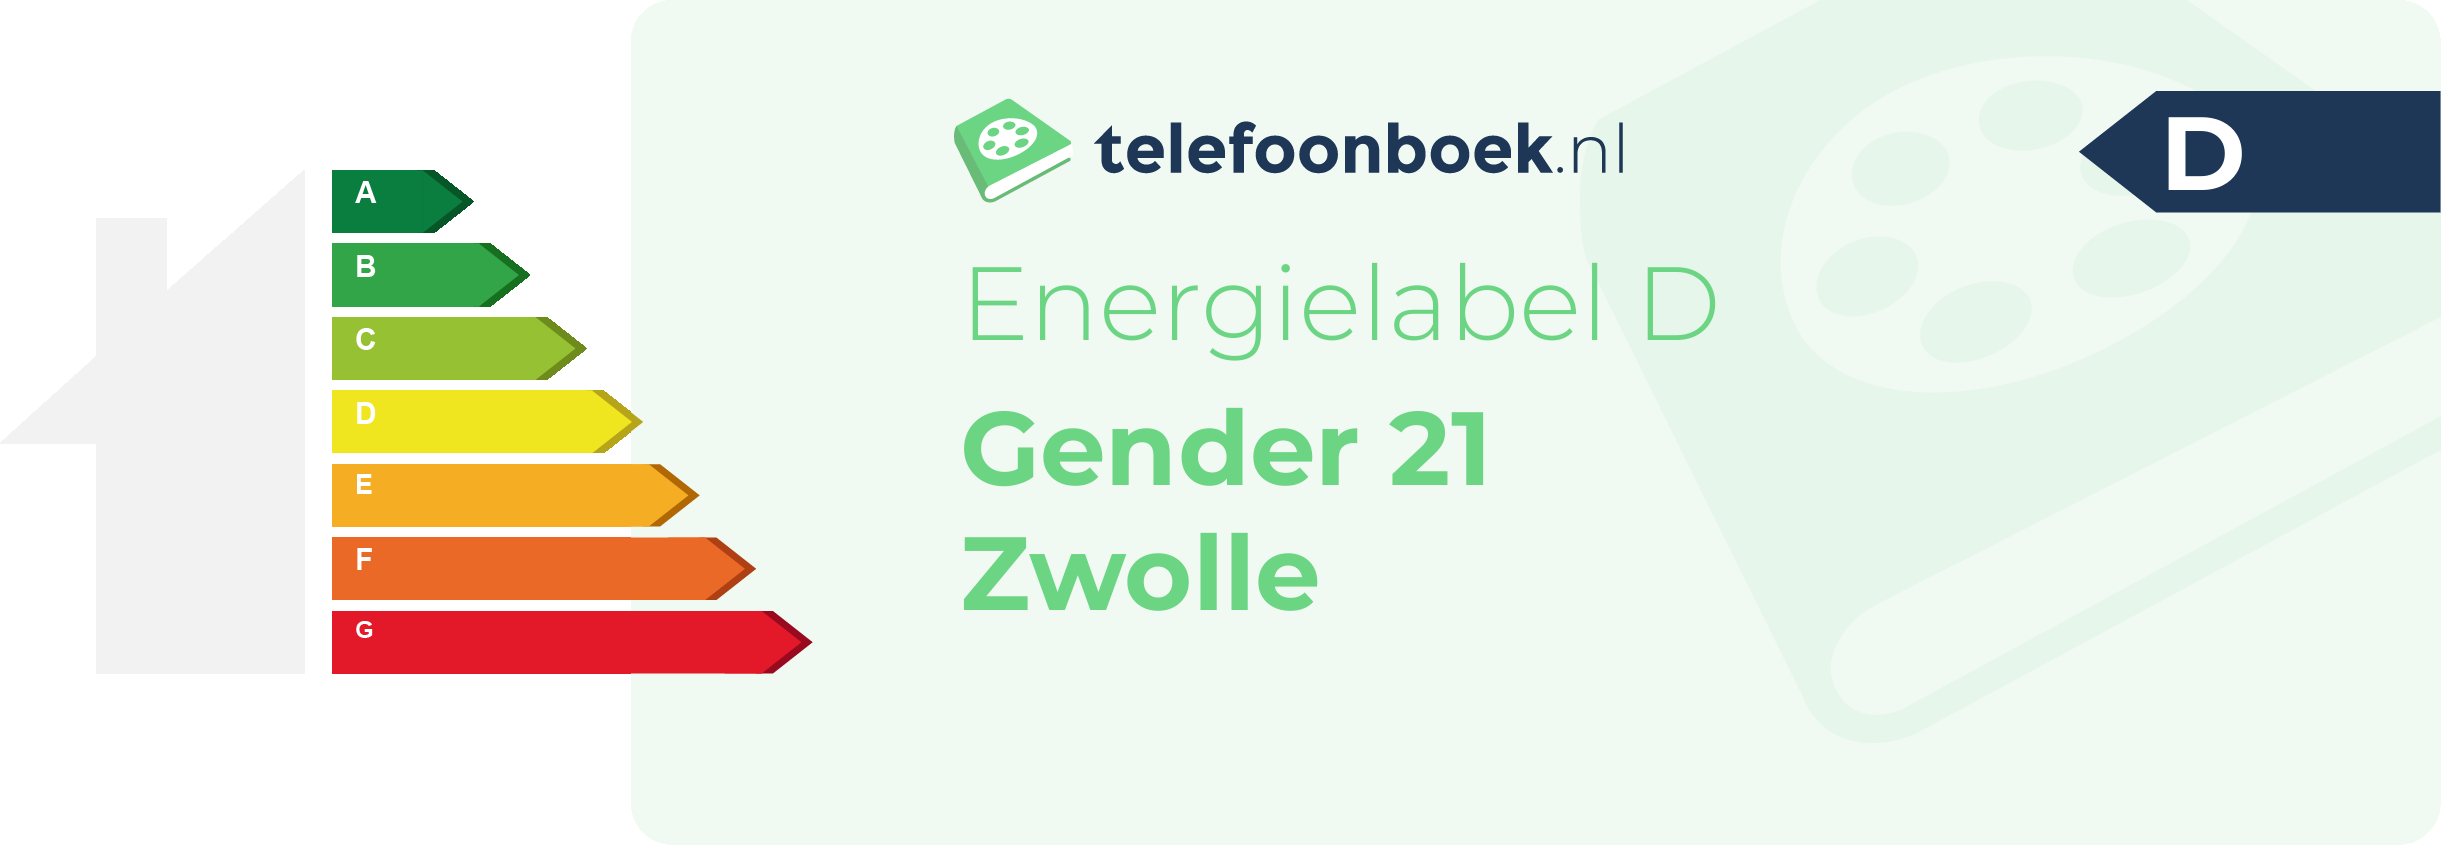 Energielabel Gender 21 Zwolle